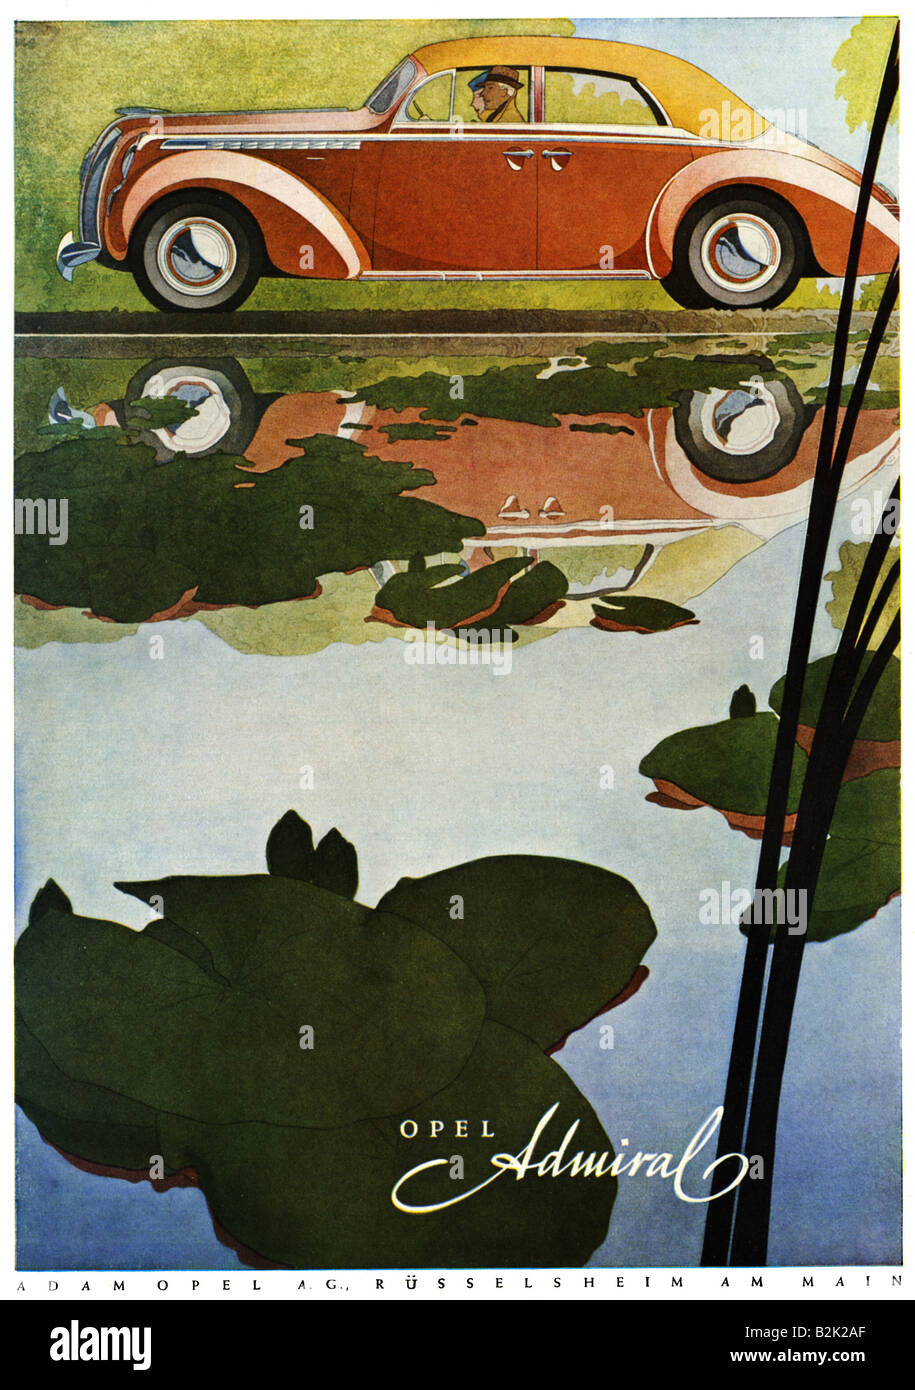 Werbung, Autos, Opel "Admiral", Adam Opel AG, Rüsselsheim, Werbung, "Atlantis", April 1939, Stockfoto